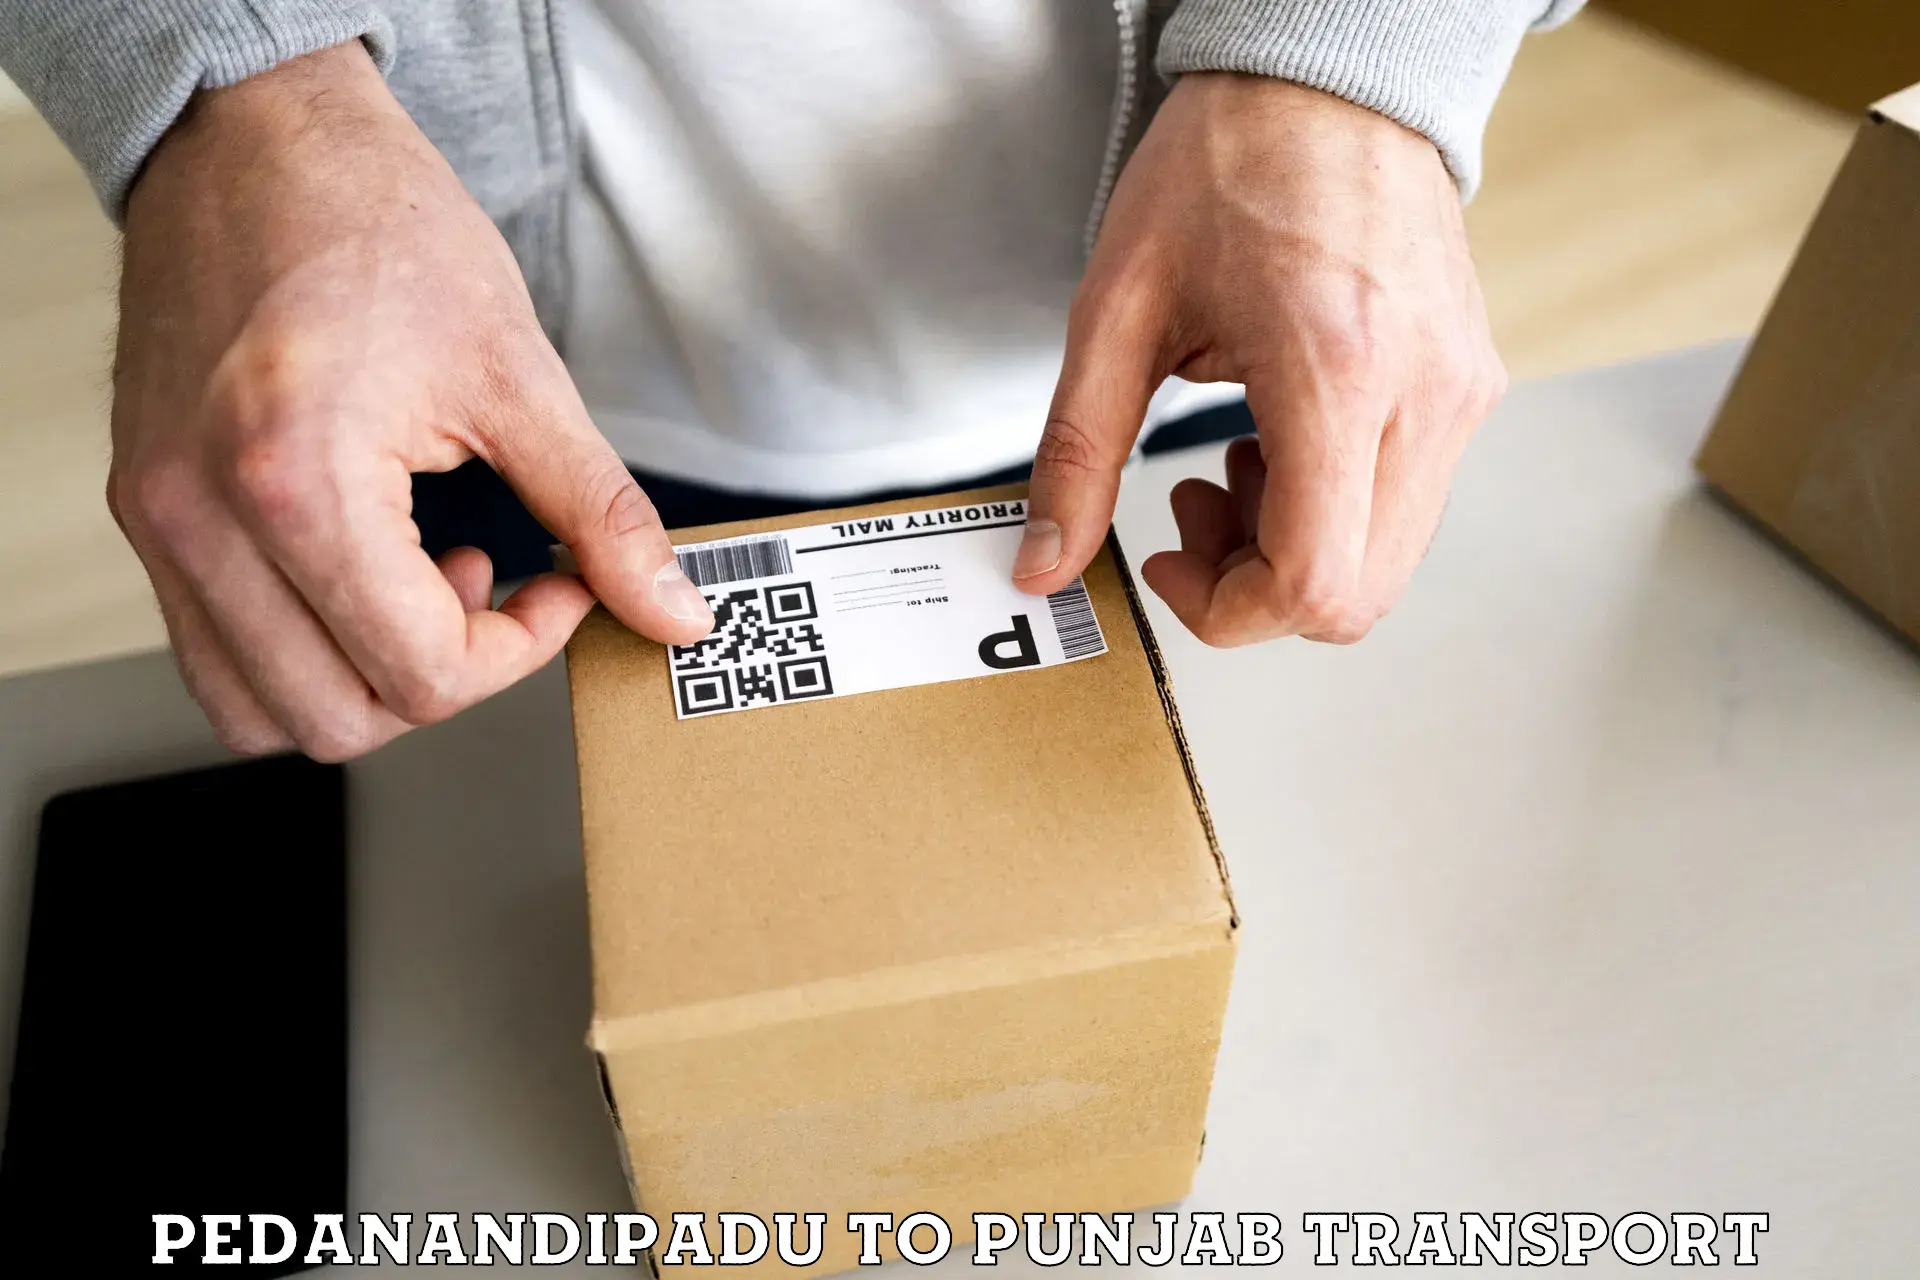 Commercial transport service Pedanandipadu to Punjab